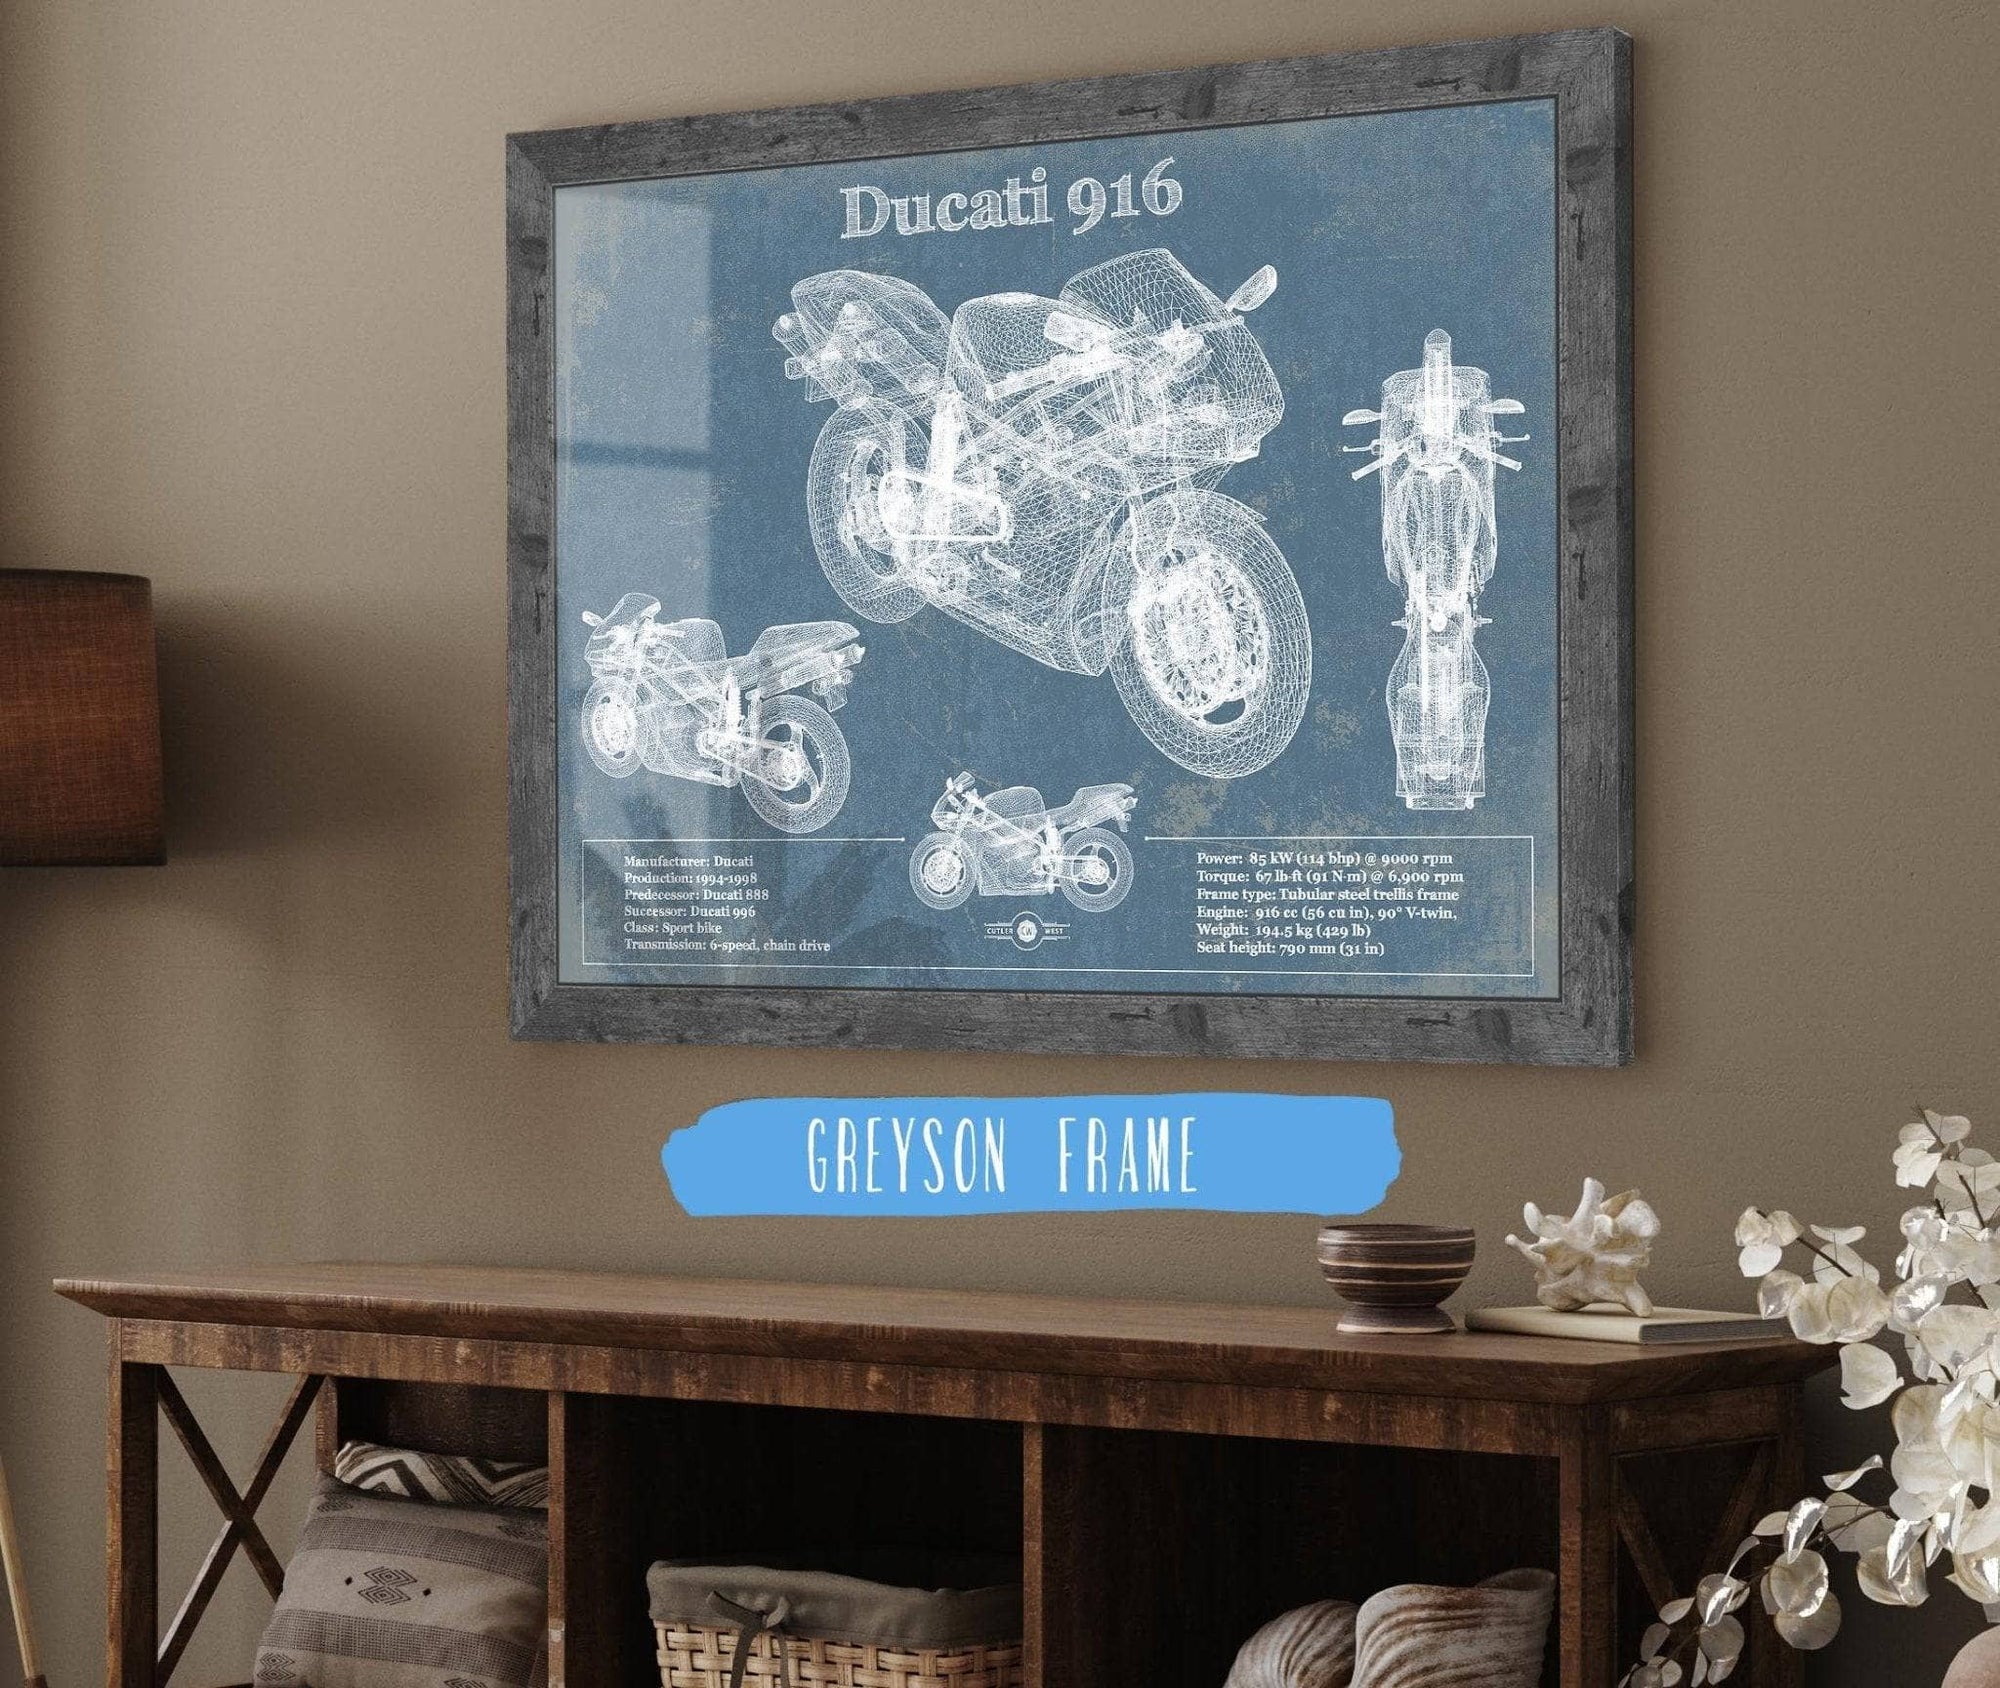 Cutler West 14" x 11" / Greyson Frame Ducati 916 Blueprint Motorcycle Patent Print 887772823_57918